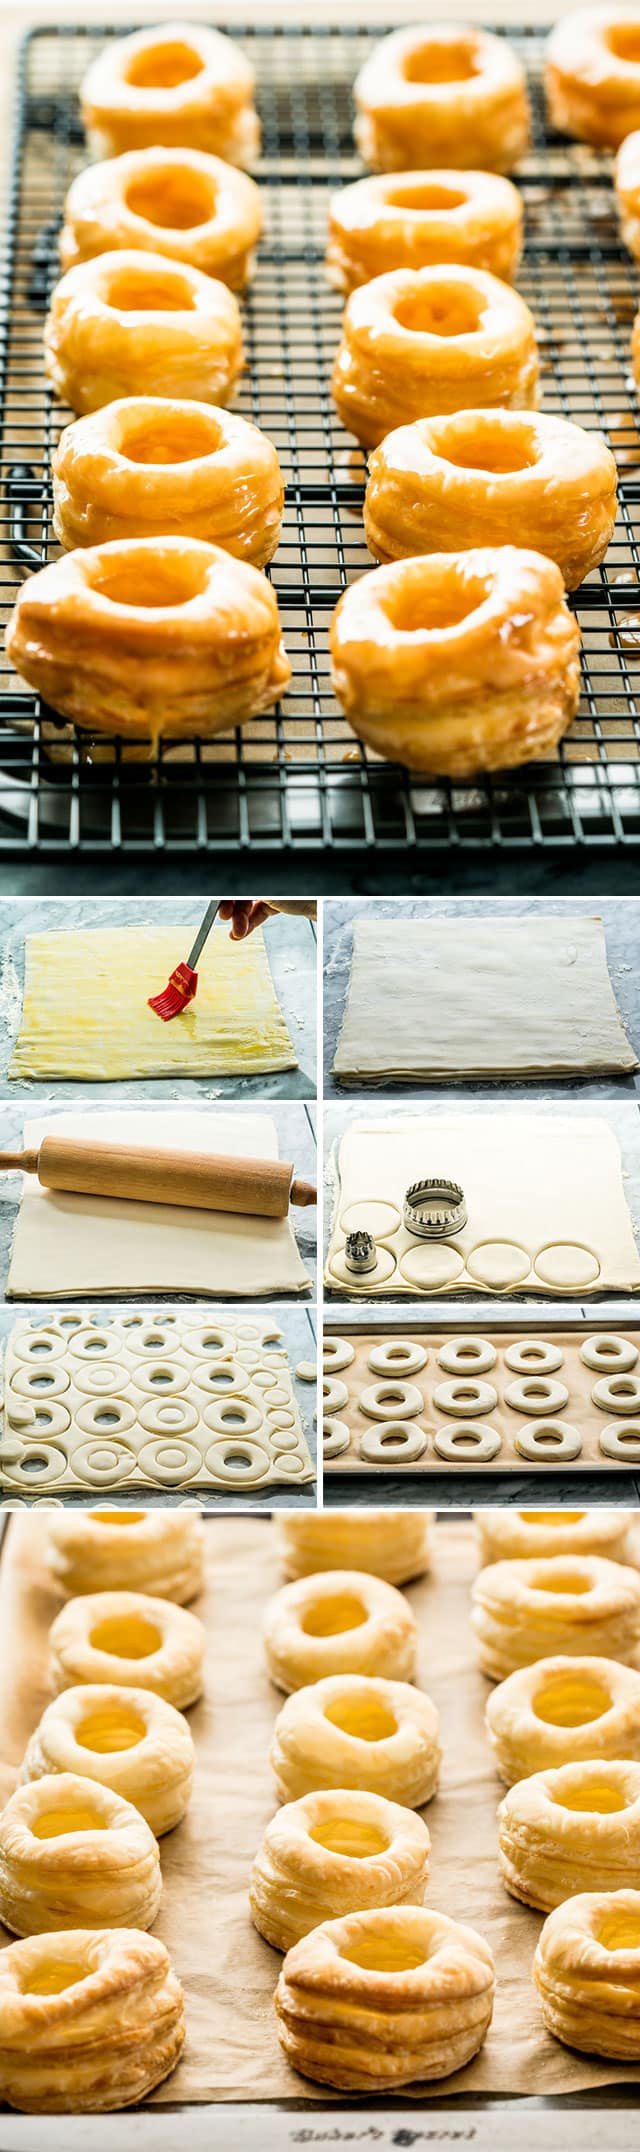 process of making dulce de leche cronuts